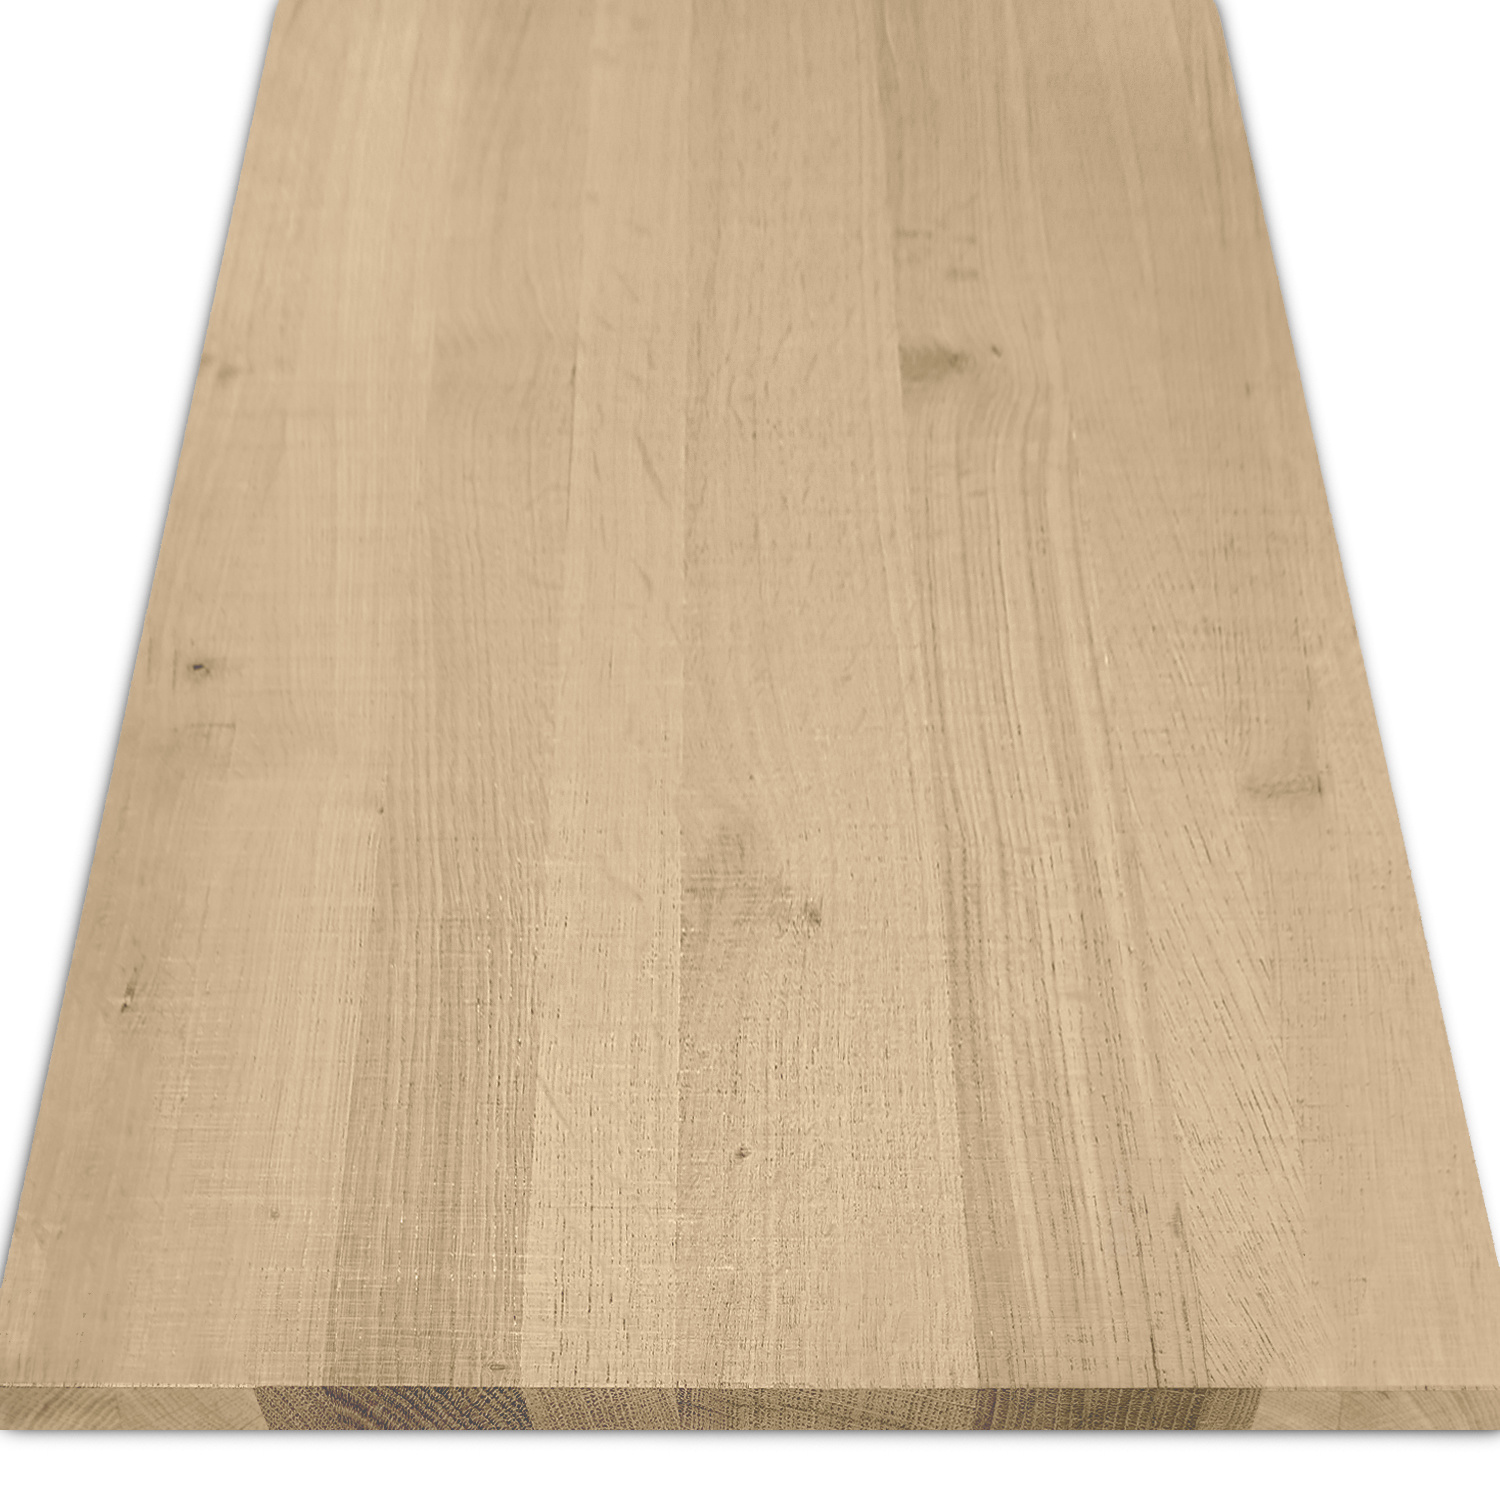  Leimholzplatte Eiche nach Maß - 2 cm dick - Eichenholz rustikal - Sägerau Optik - Eiche Massivholzplatte - verleimt & künstlich getrocknet (HF 8-12%) - 15-120x20-300 cm